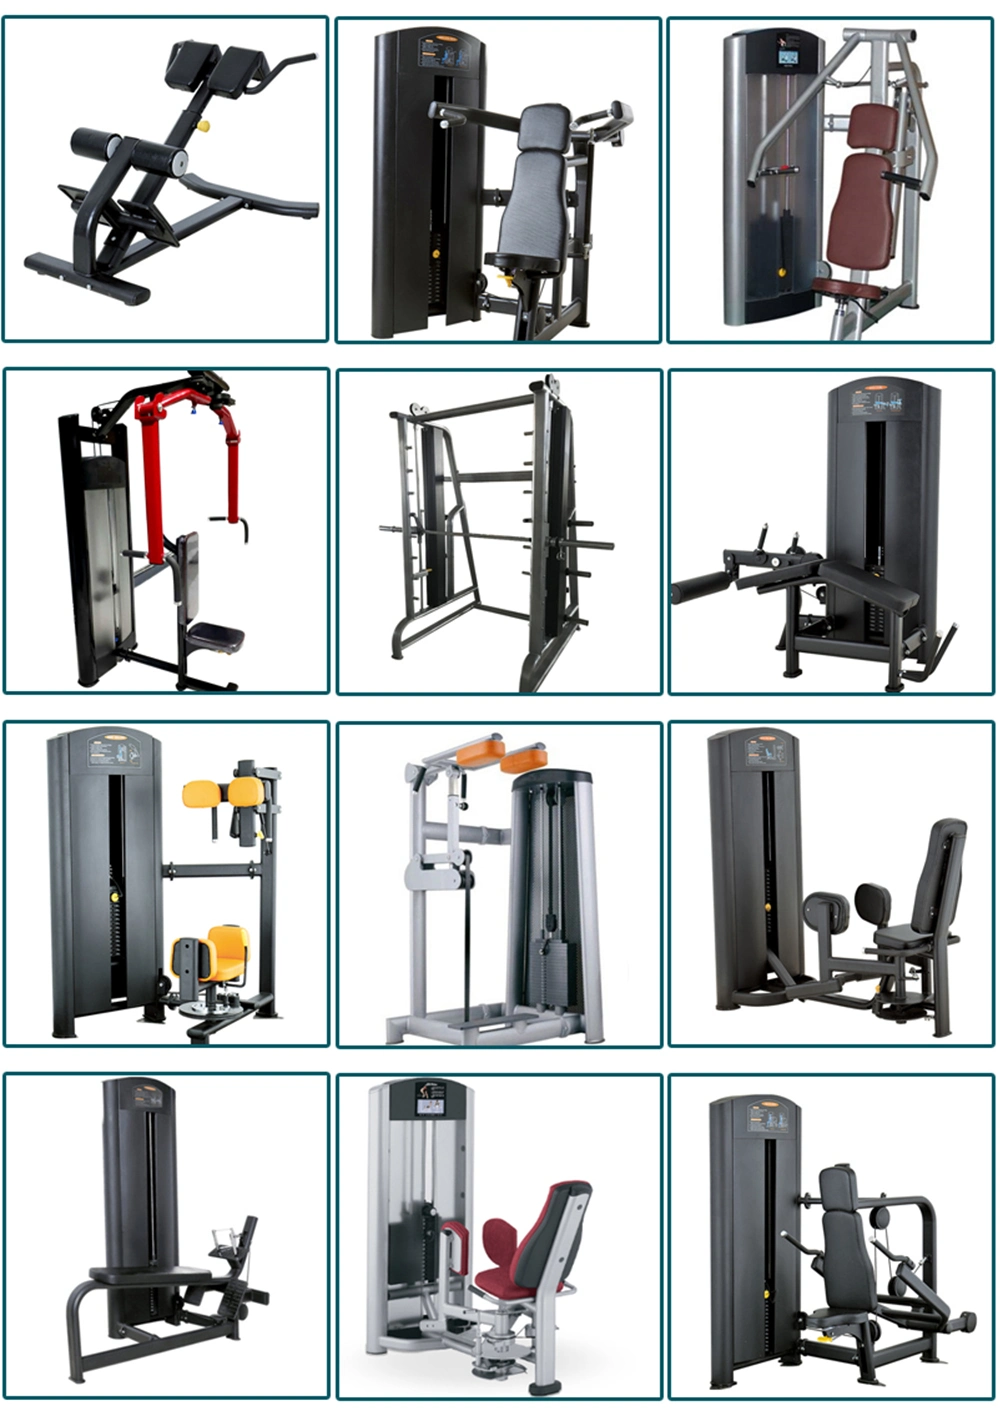 Seated Leg Press Fitness, Lifefitness Machine Gym Equipment